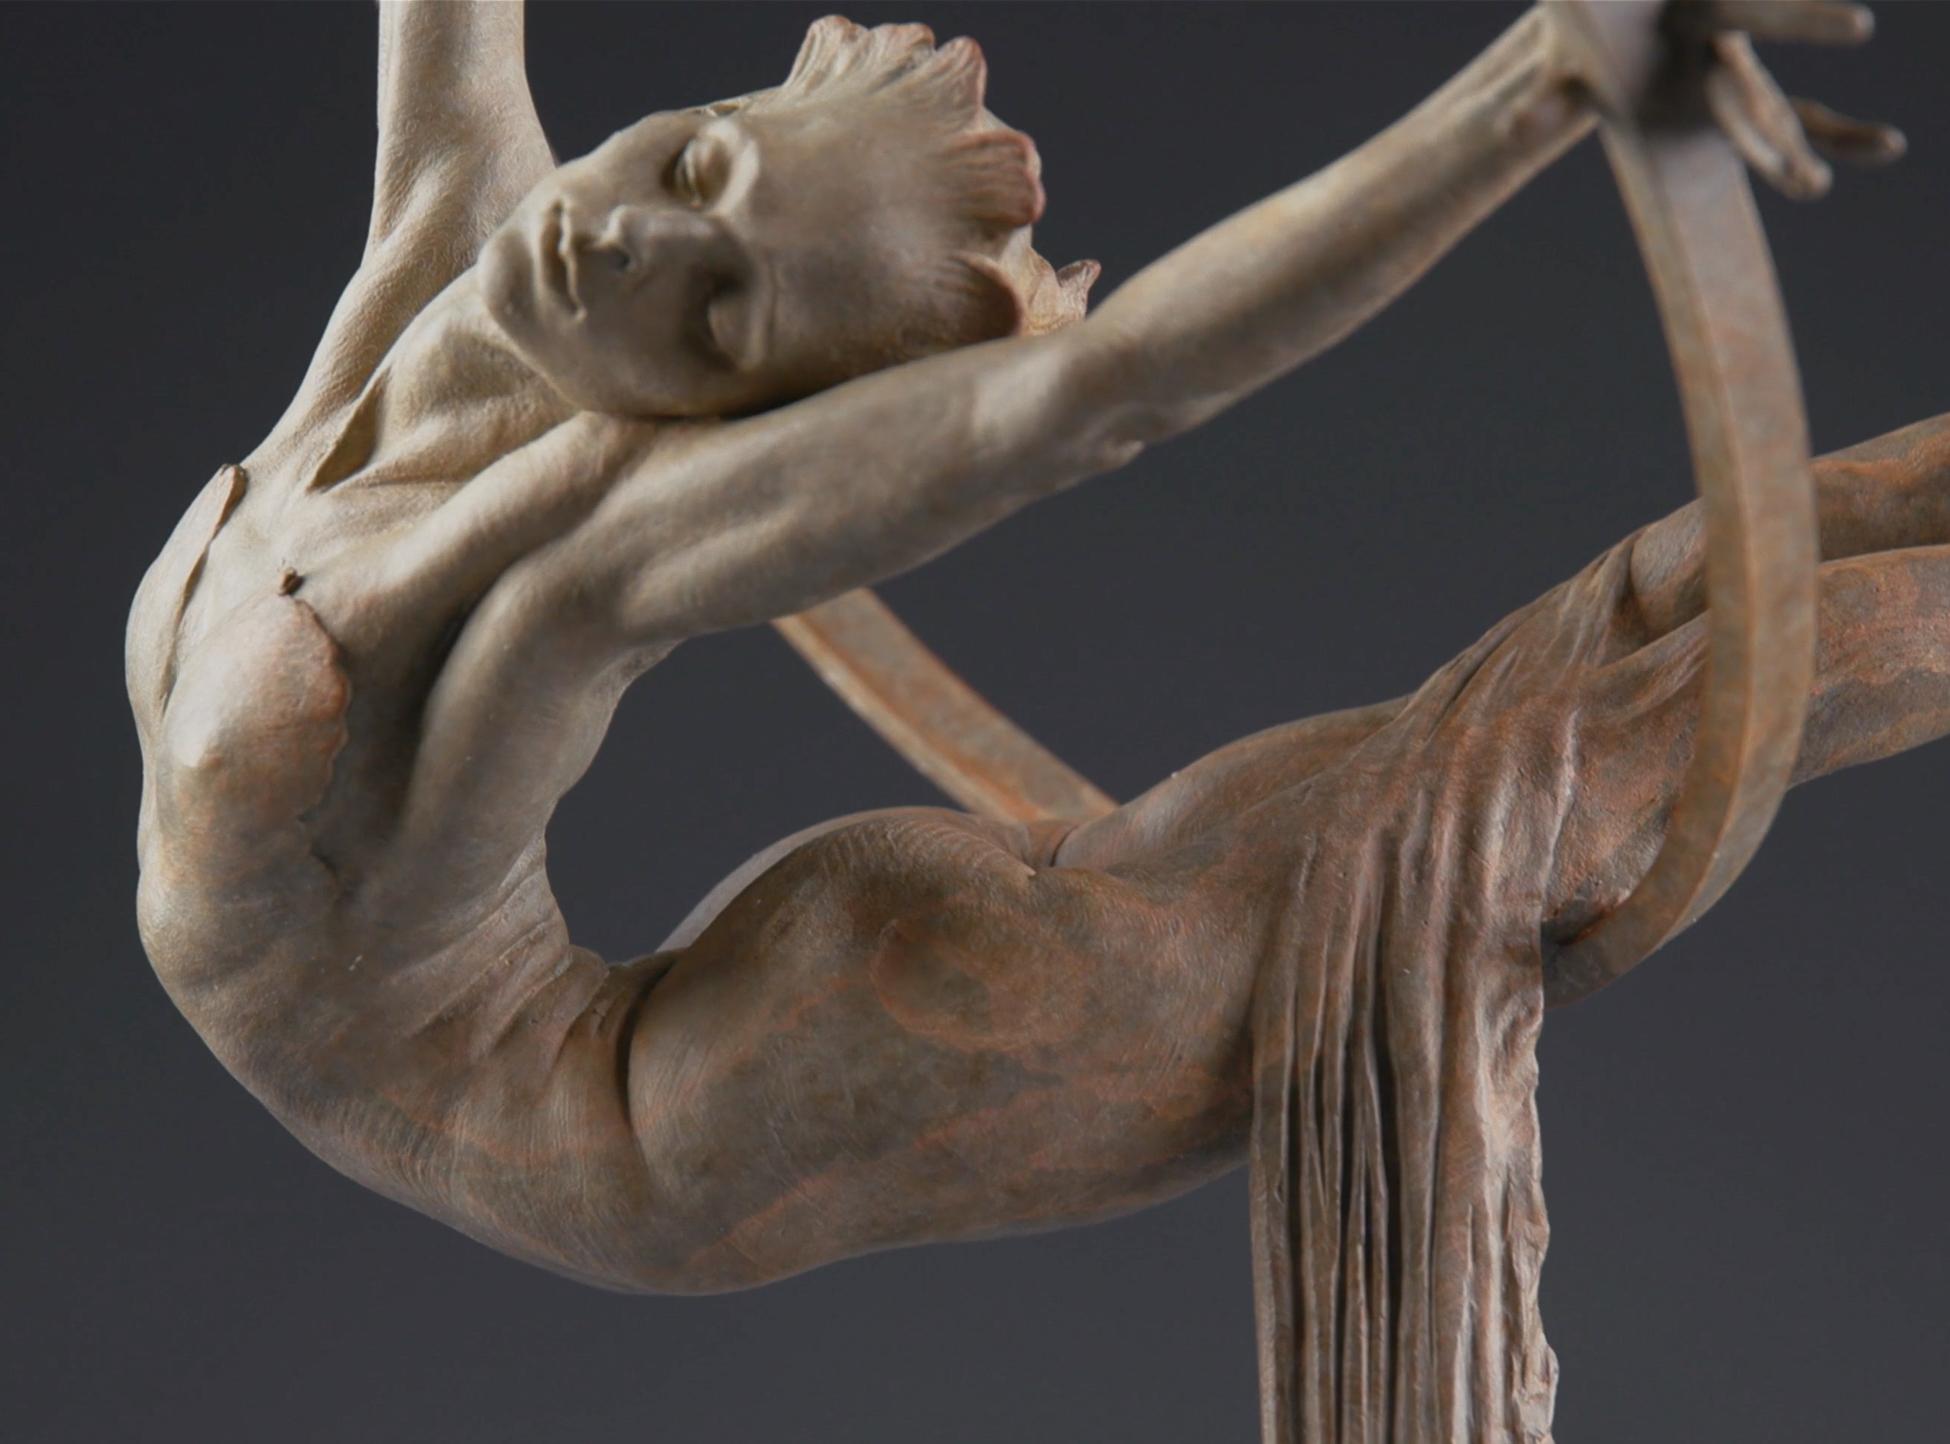 Elena, Atelier – Sculpture von Richard MacDonald